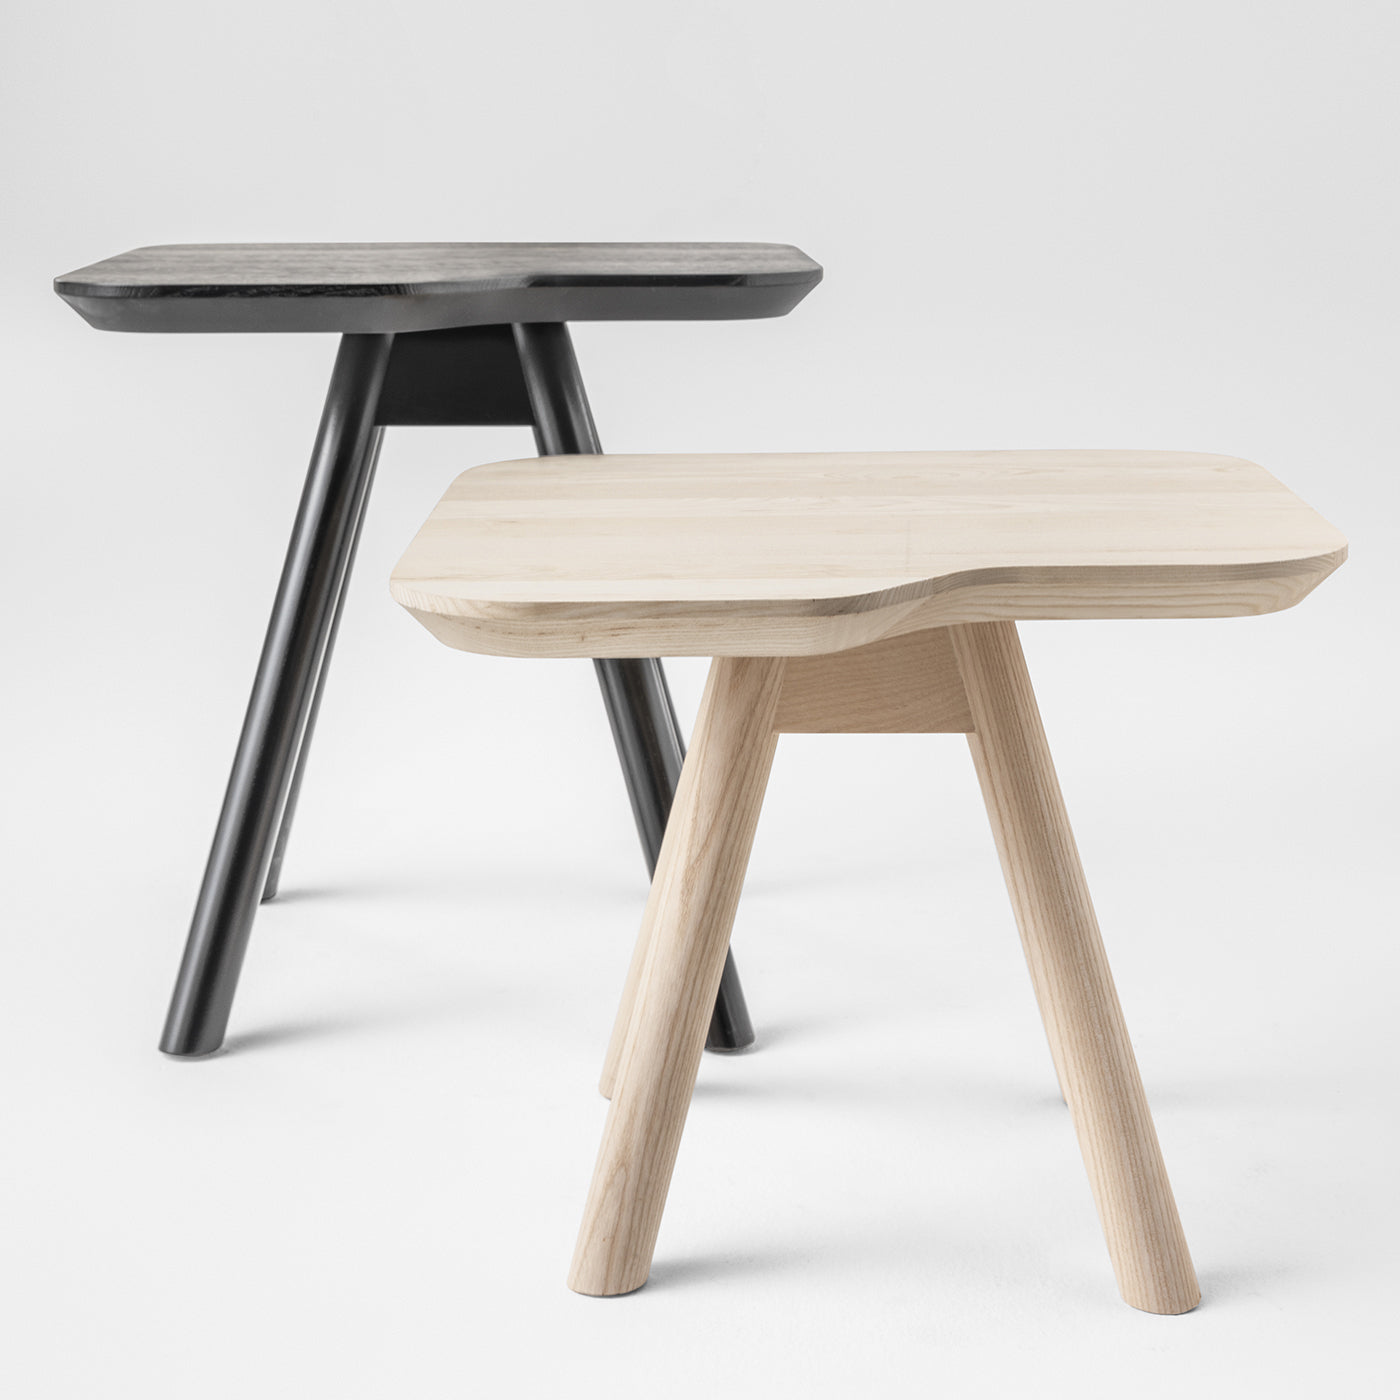 Aky Small White Side Table by Emilio Nanni - Alternative view 2